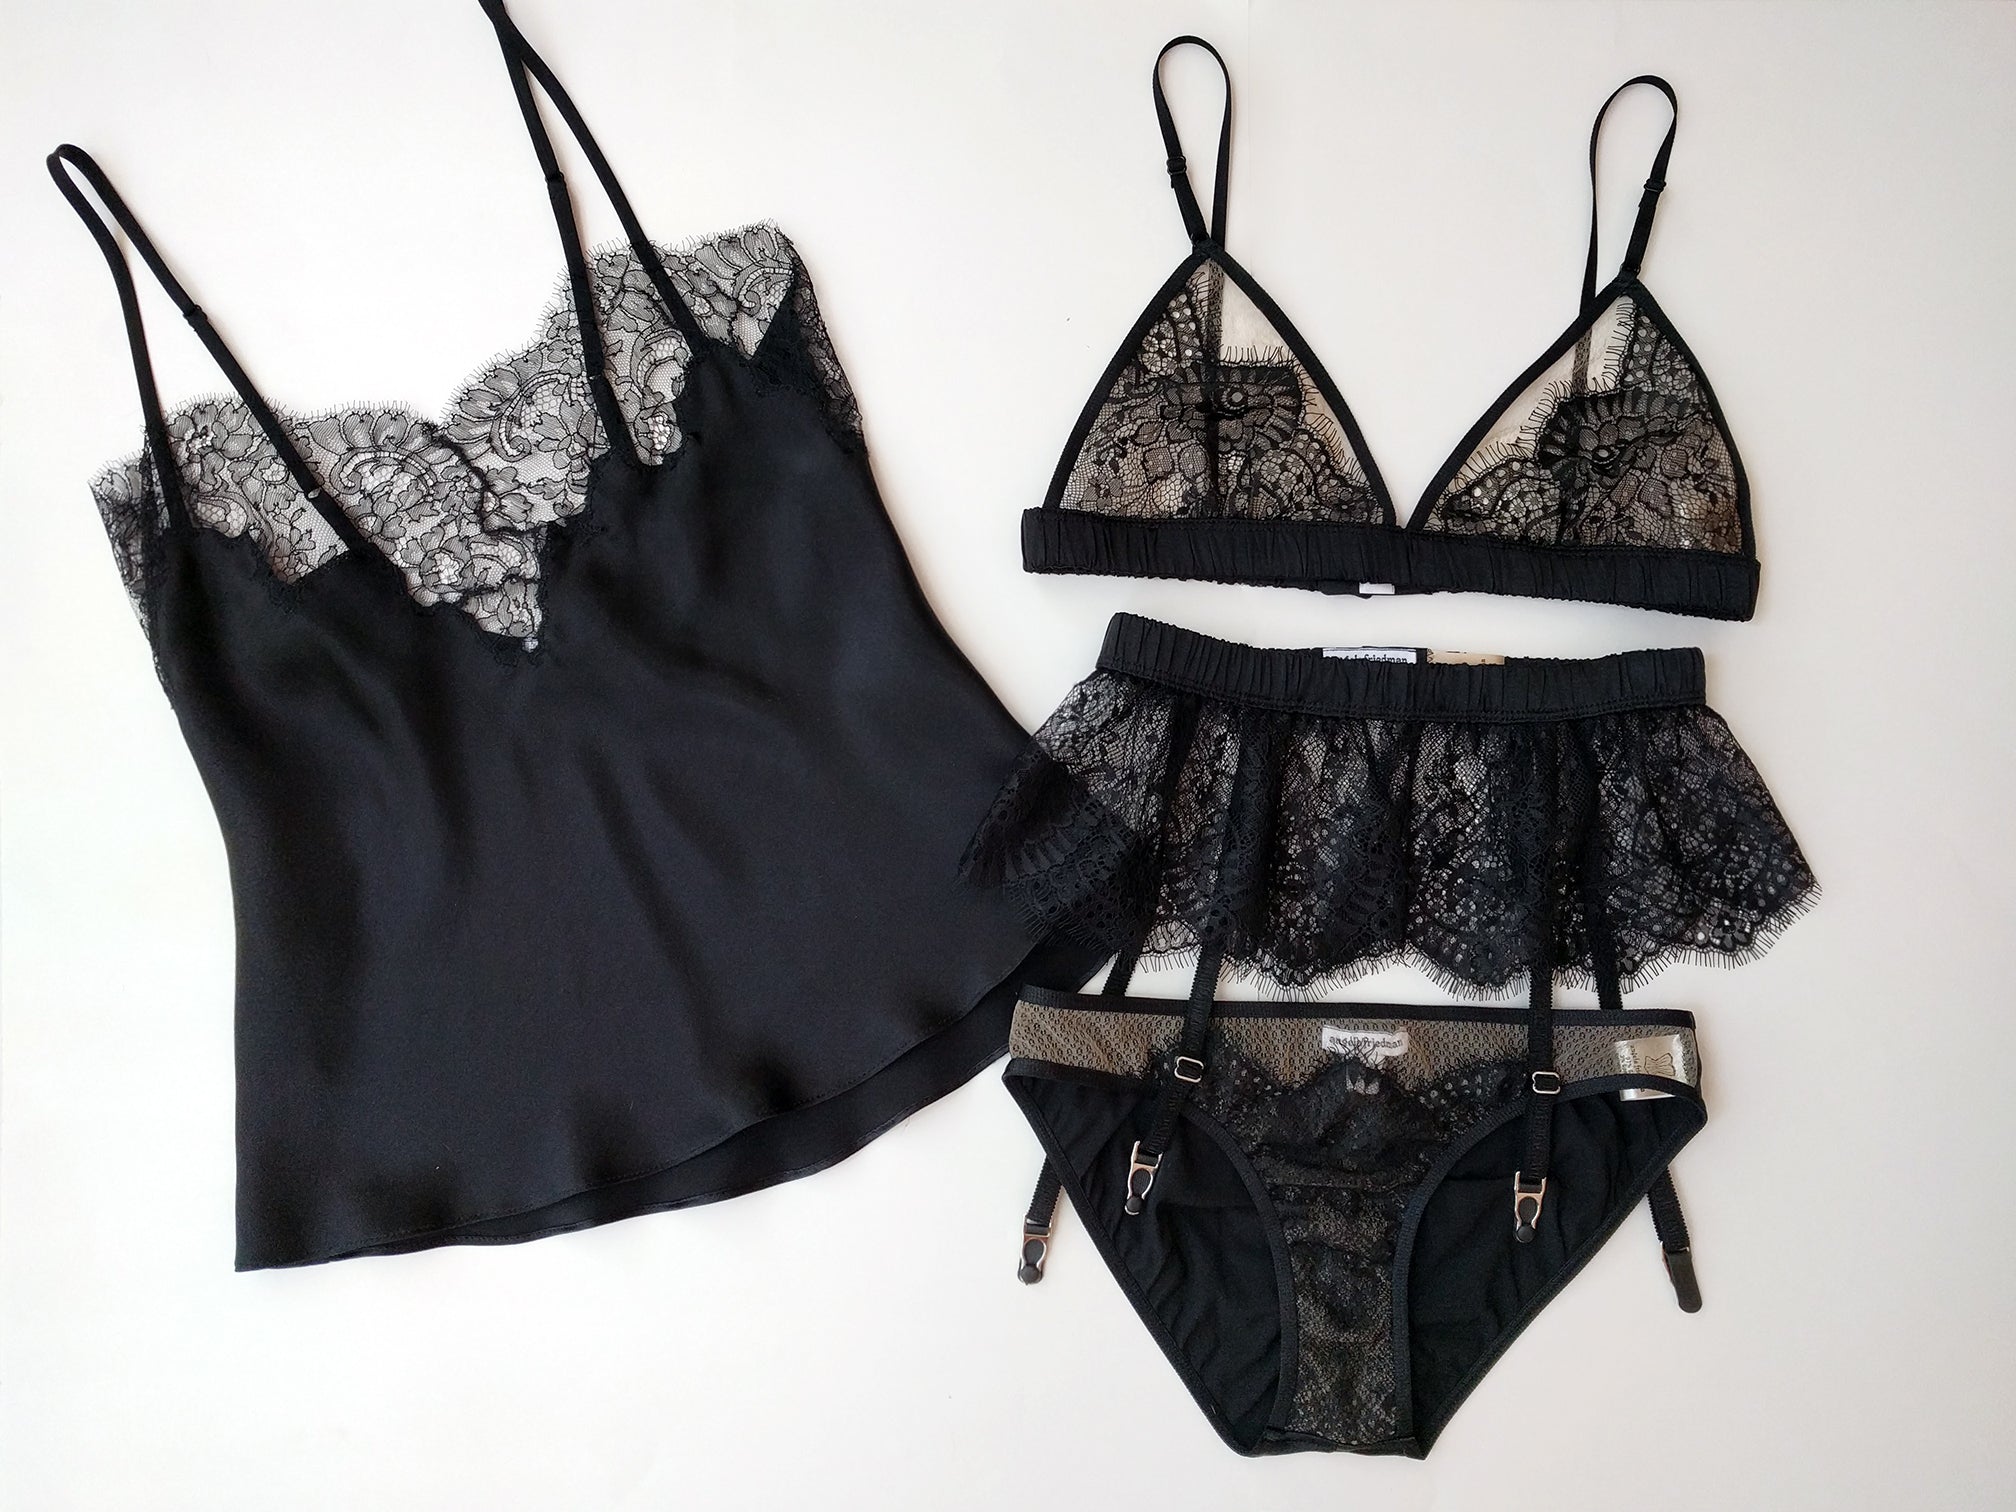 Angela Friedman luxury designer camisole and black lace underwear sets